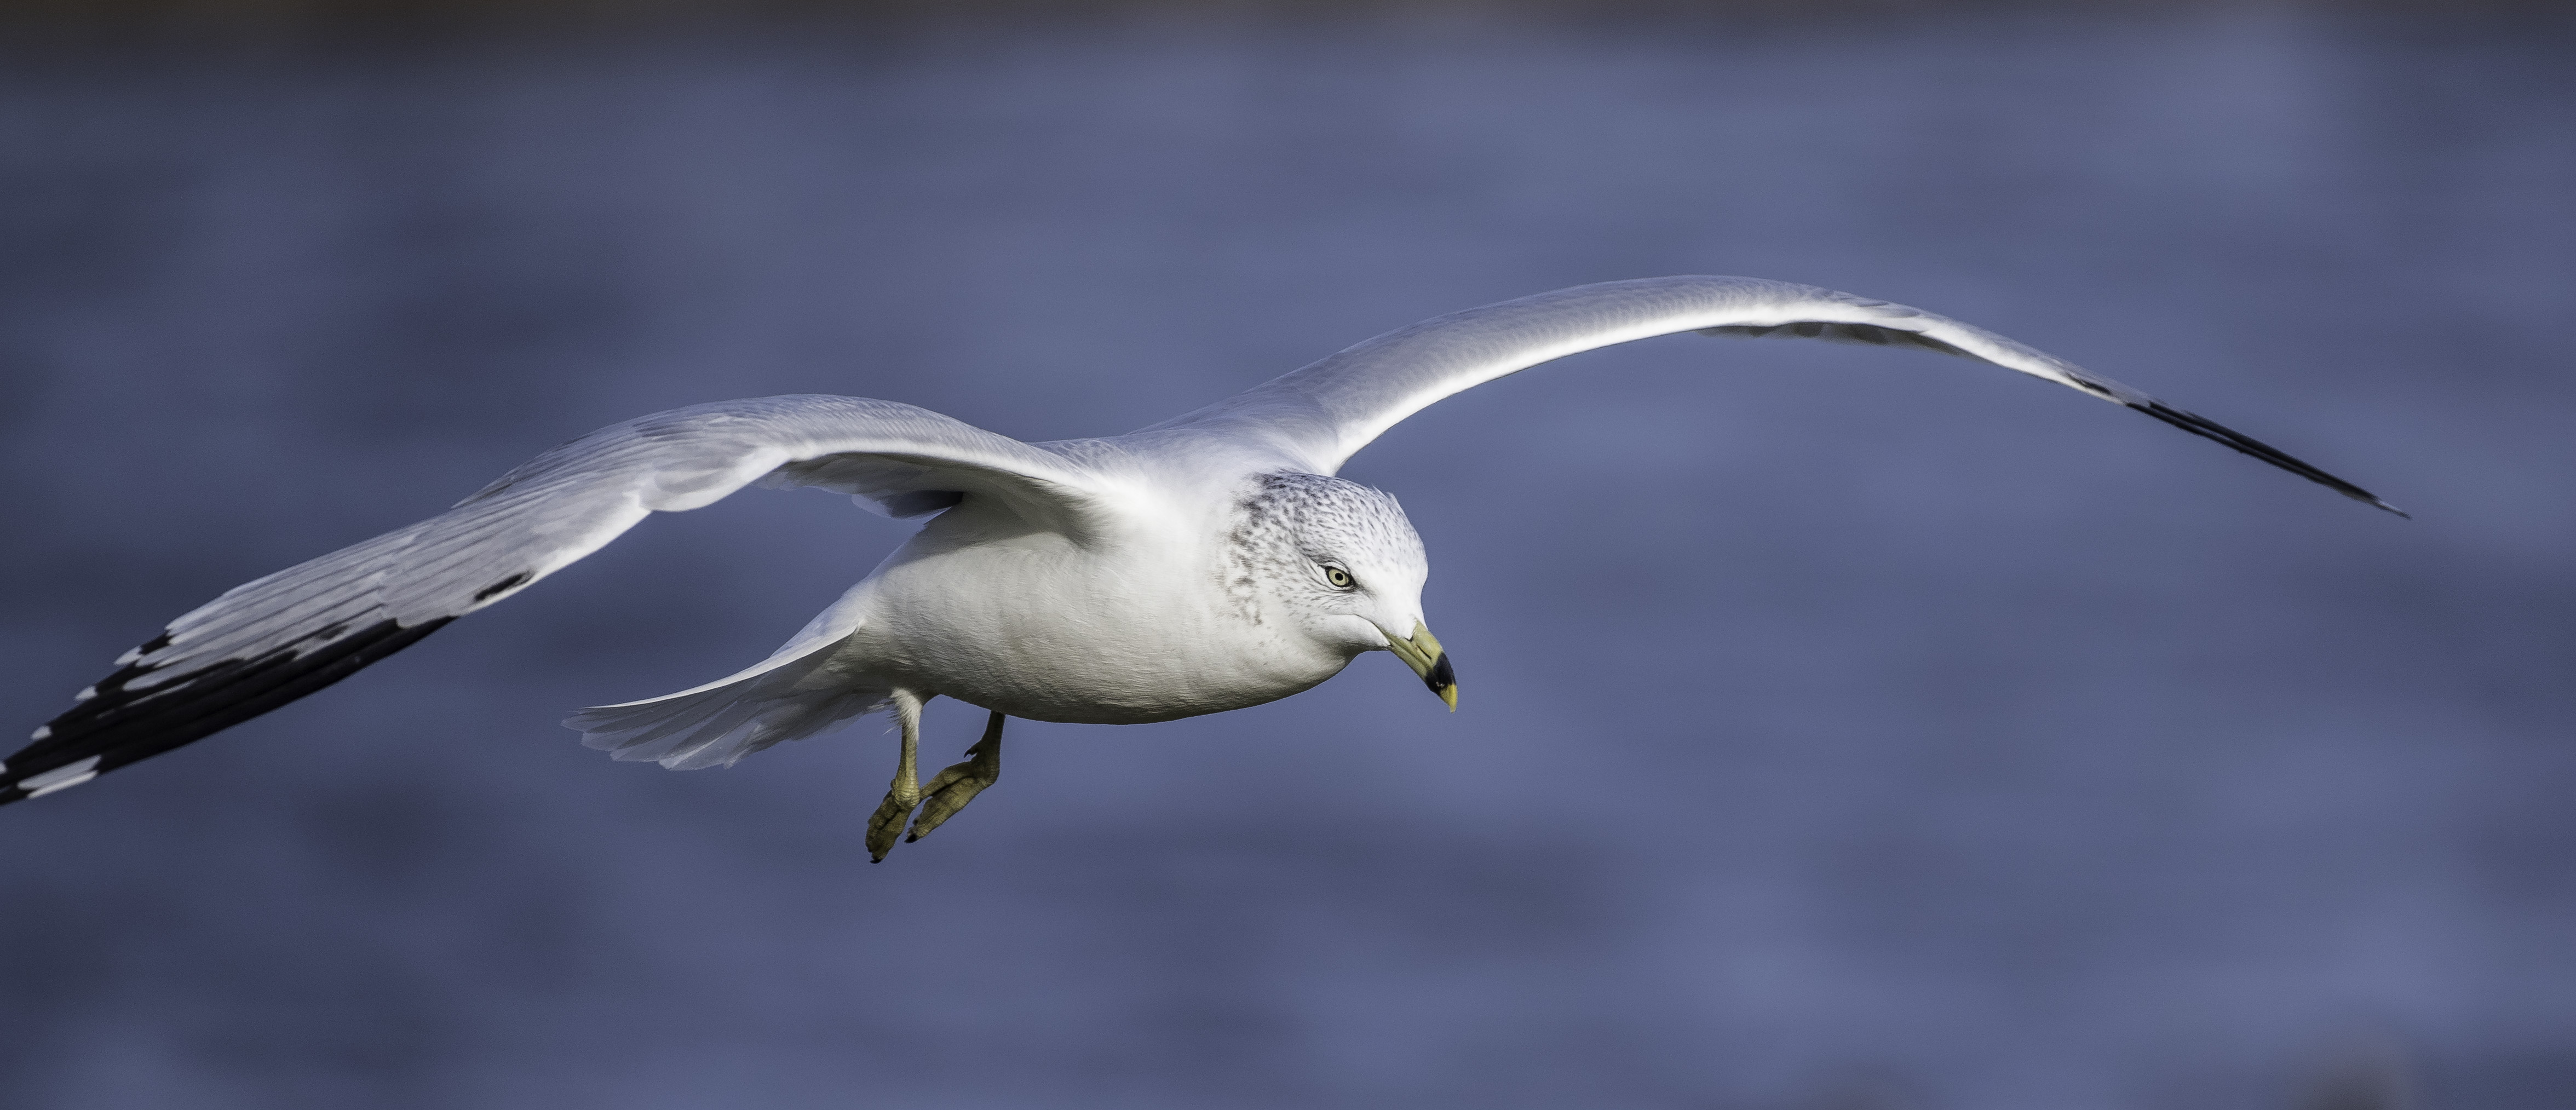 Seagull in Flight image - Free stock photo - Public Domain photo ...